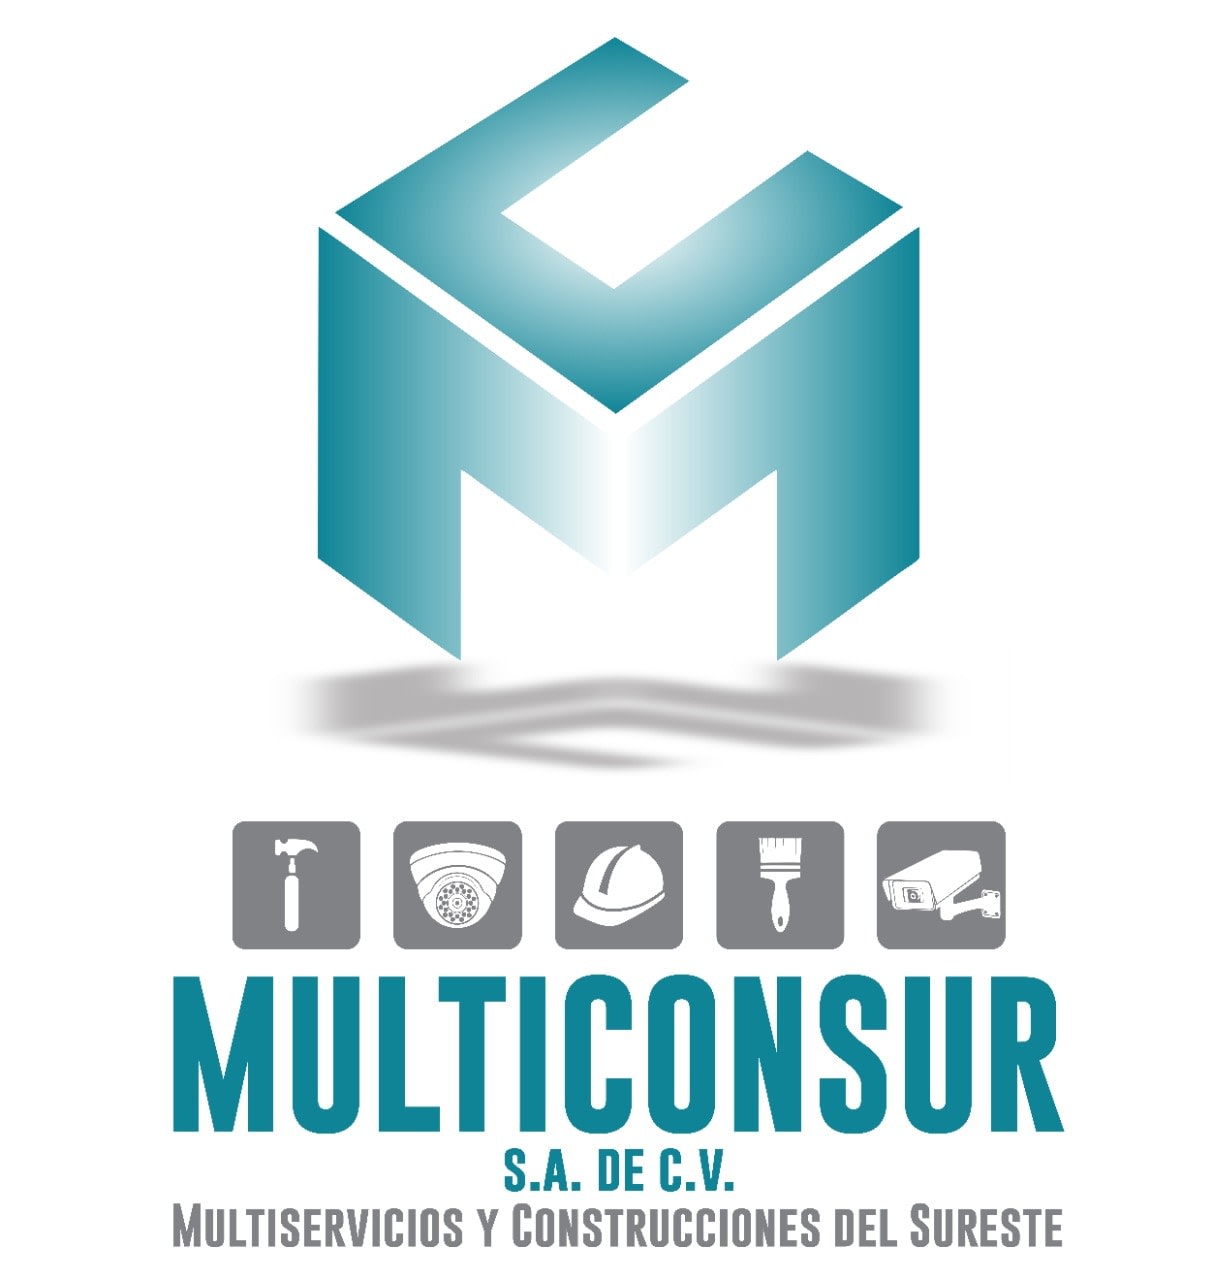 Multiconsur S.A. de C.V.